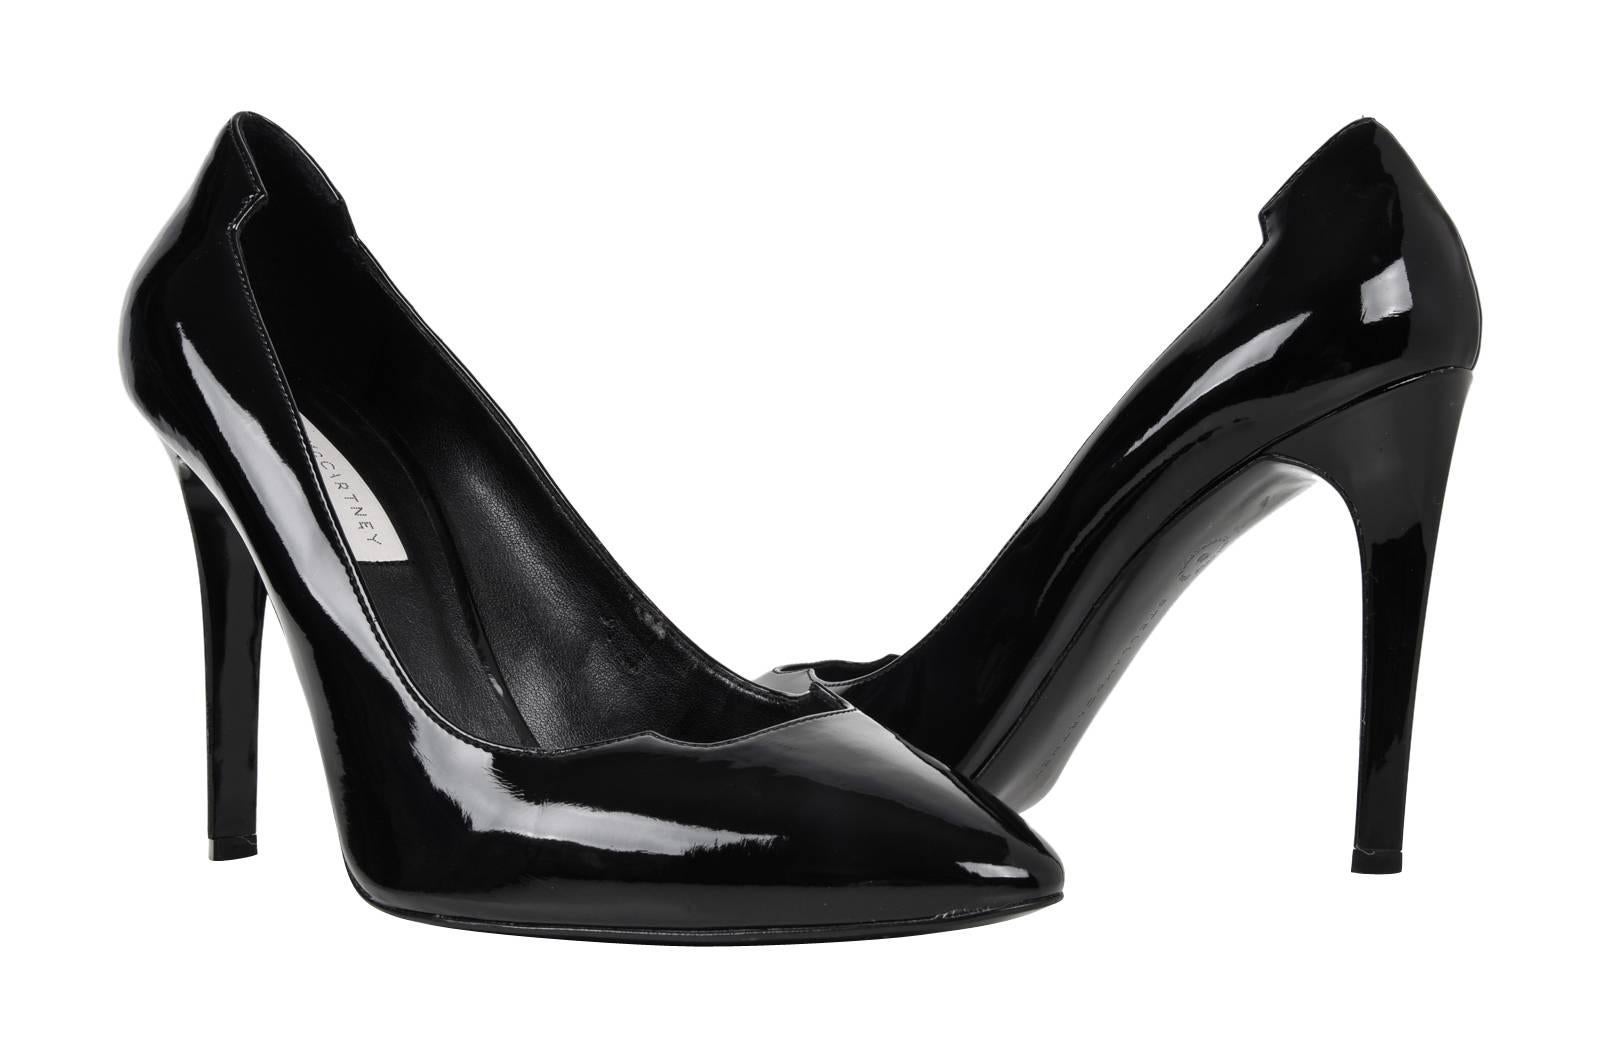 Stella McCartney Shoe Black Patent Leather Morgana Pump 40 / 10 New 2